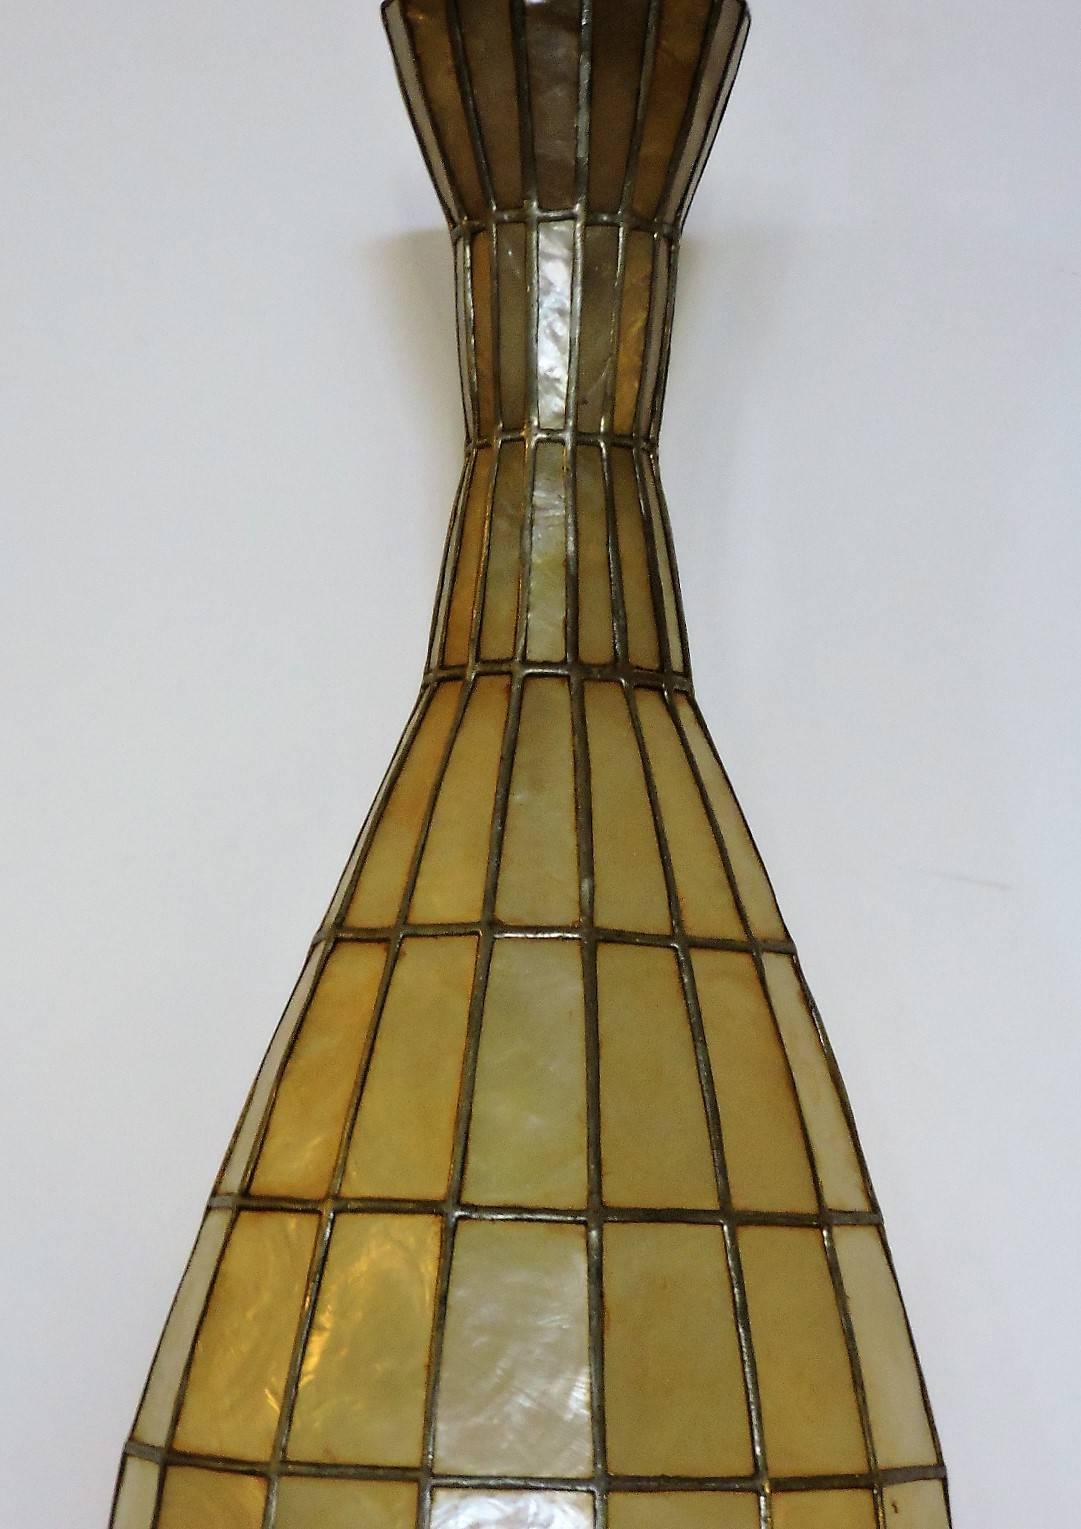 A  large sculptural capiz shell chandelier pendant light with an elongated bottle neck vase shape - circa 1960s.